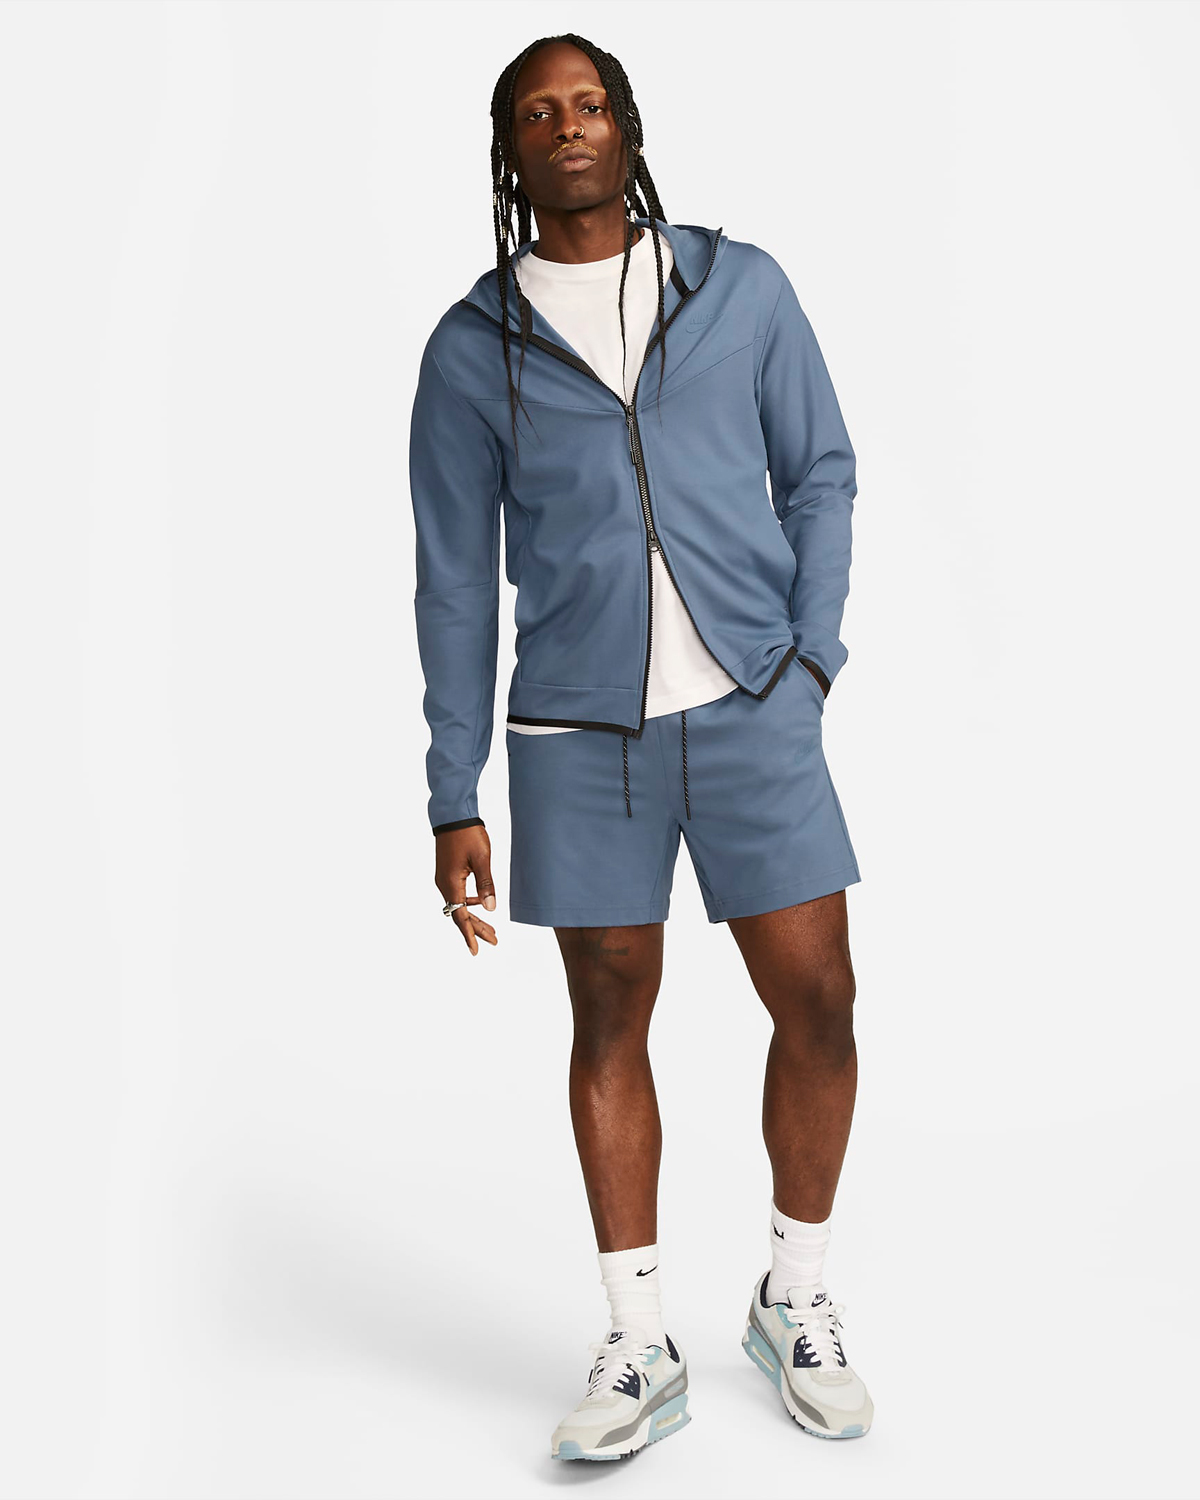 Nike-Tech-Fleece-Lightweight-Zip-Hoodie-Diffused-Blue-Outfit